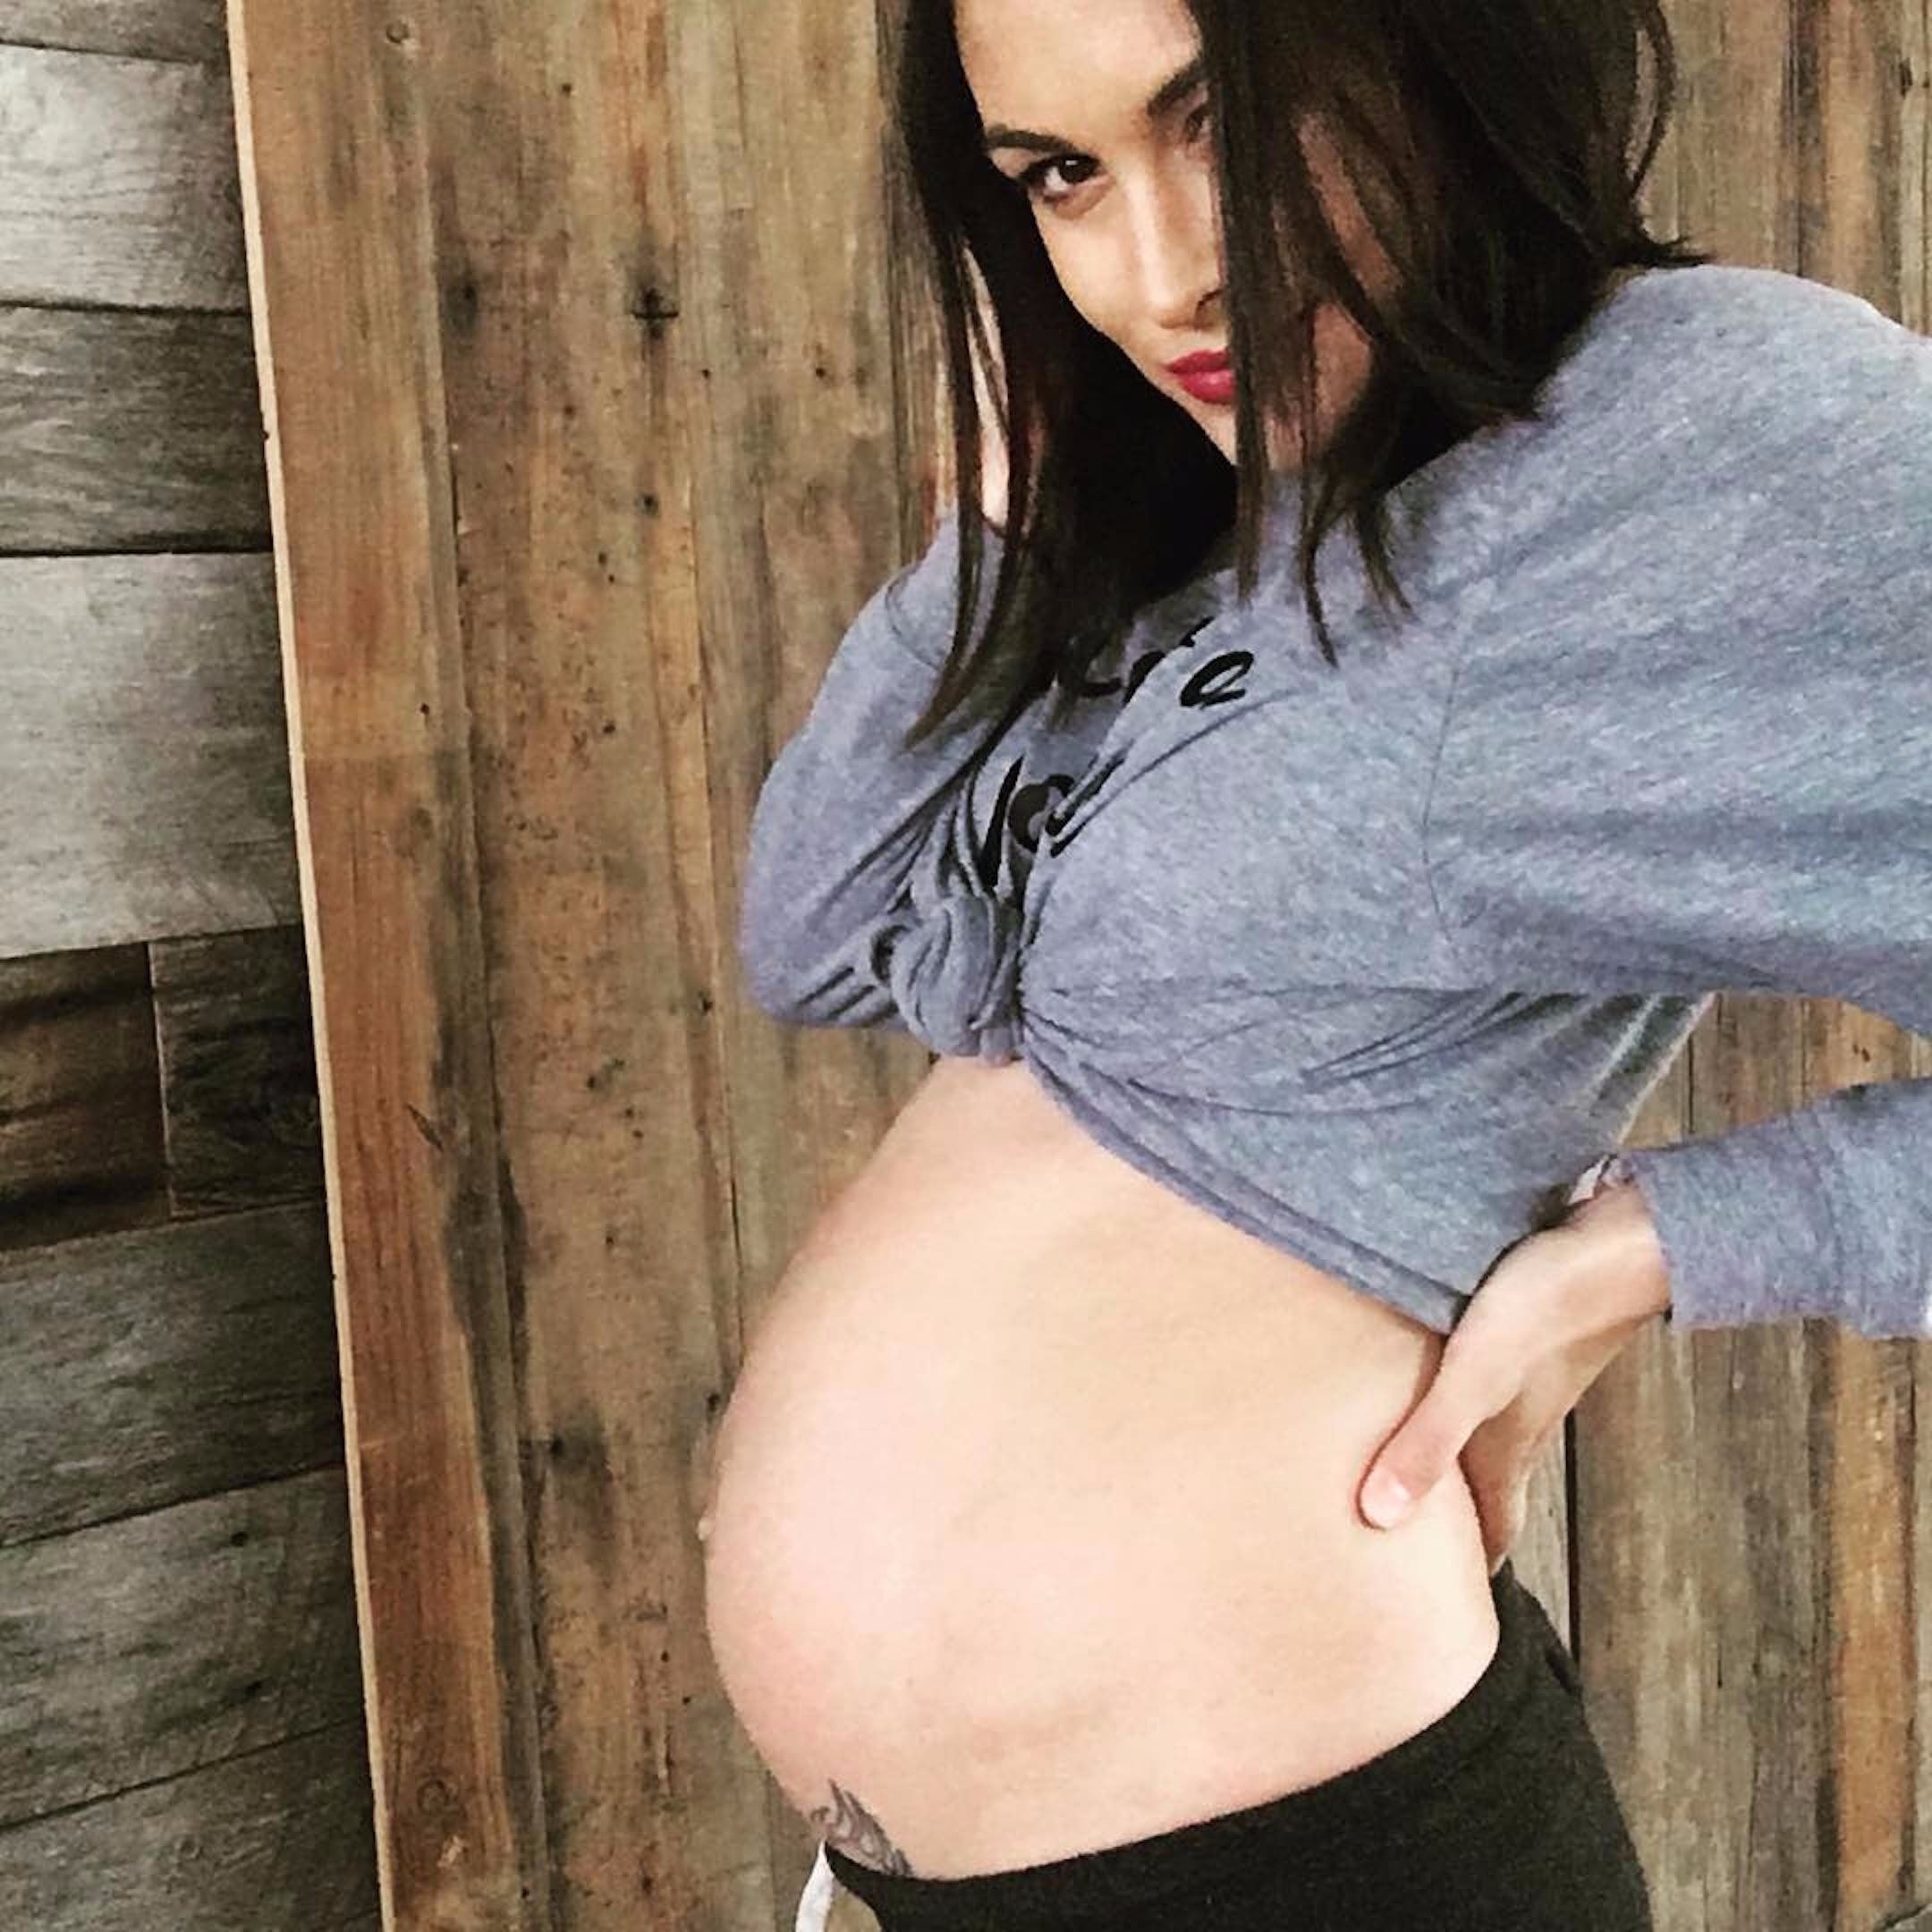 Brie Bella, husband Daniel Bryan expecting first child